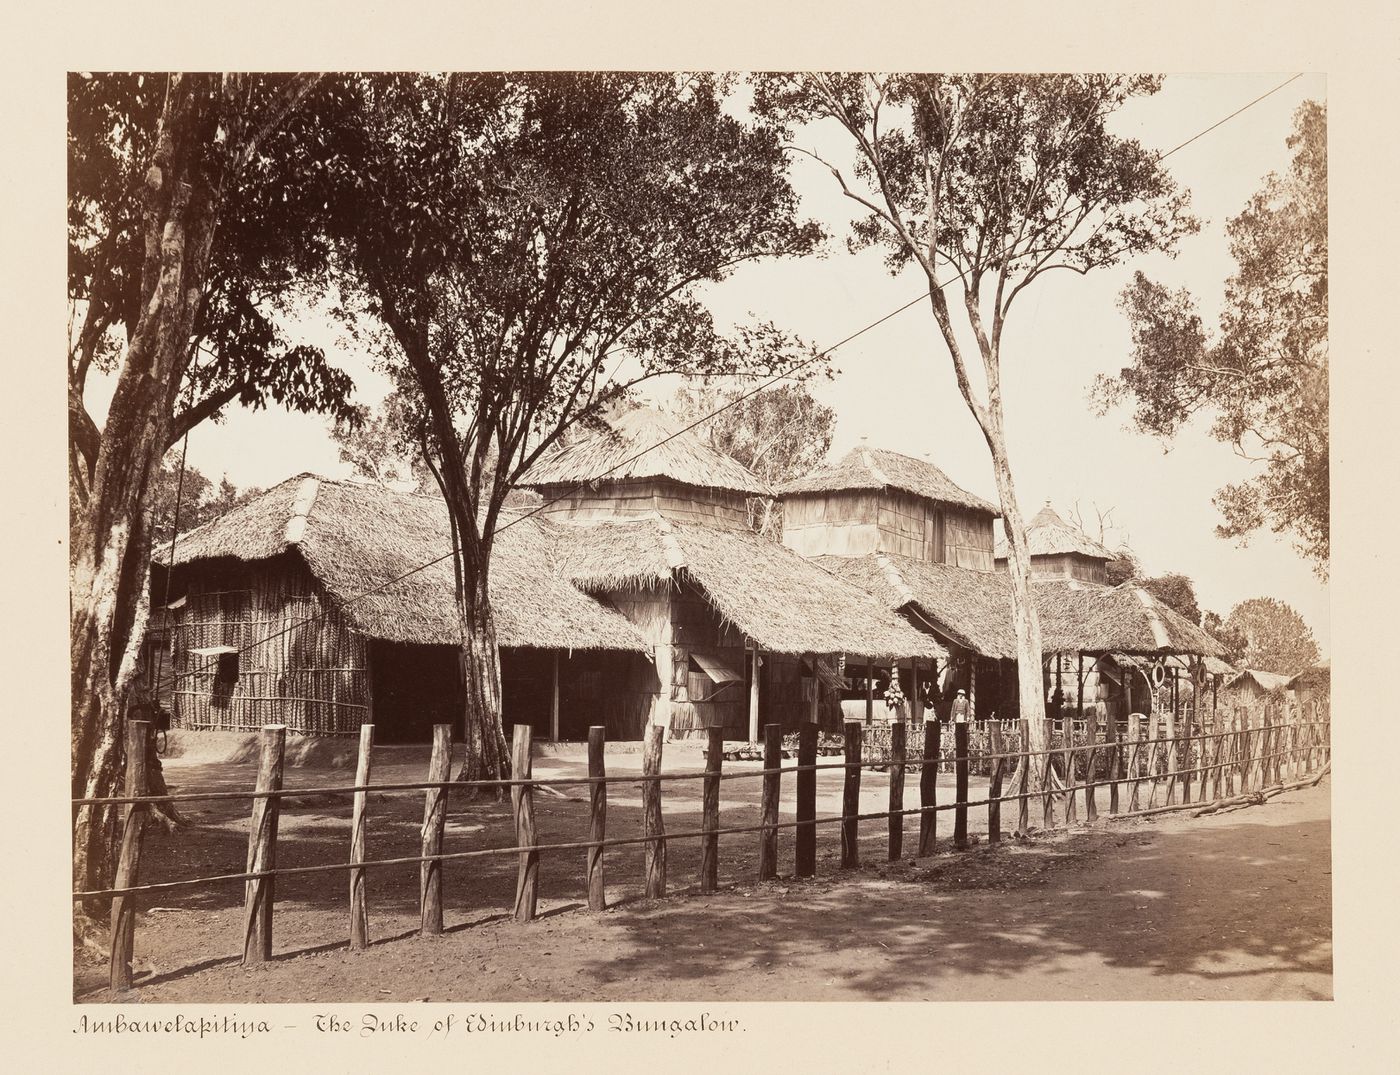 View of the Duke of Edinburgh's bungalow, Ambawela, Ceylon (now Sri Lanka)